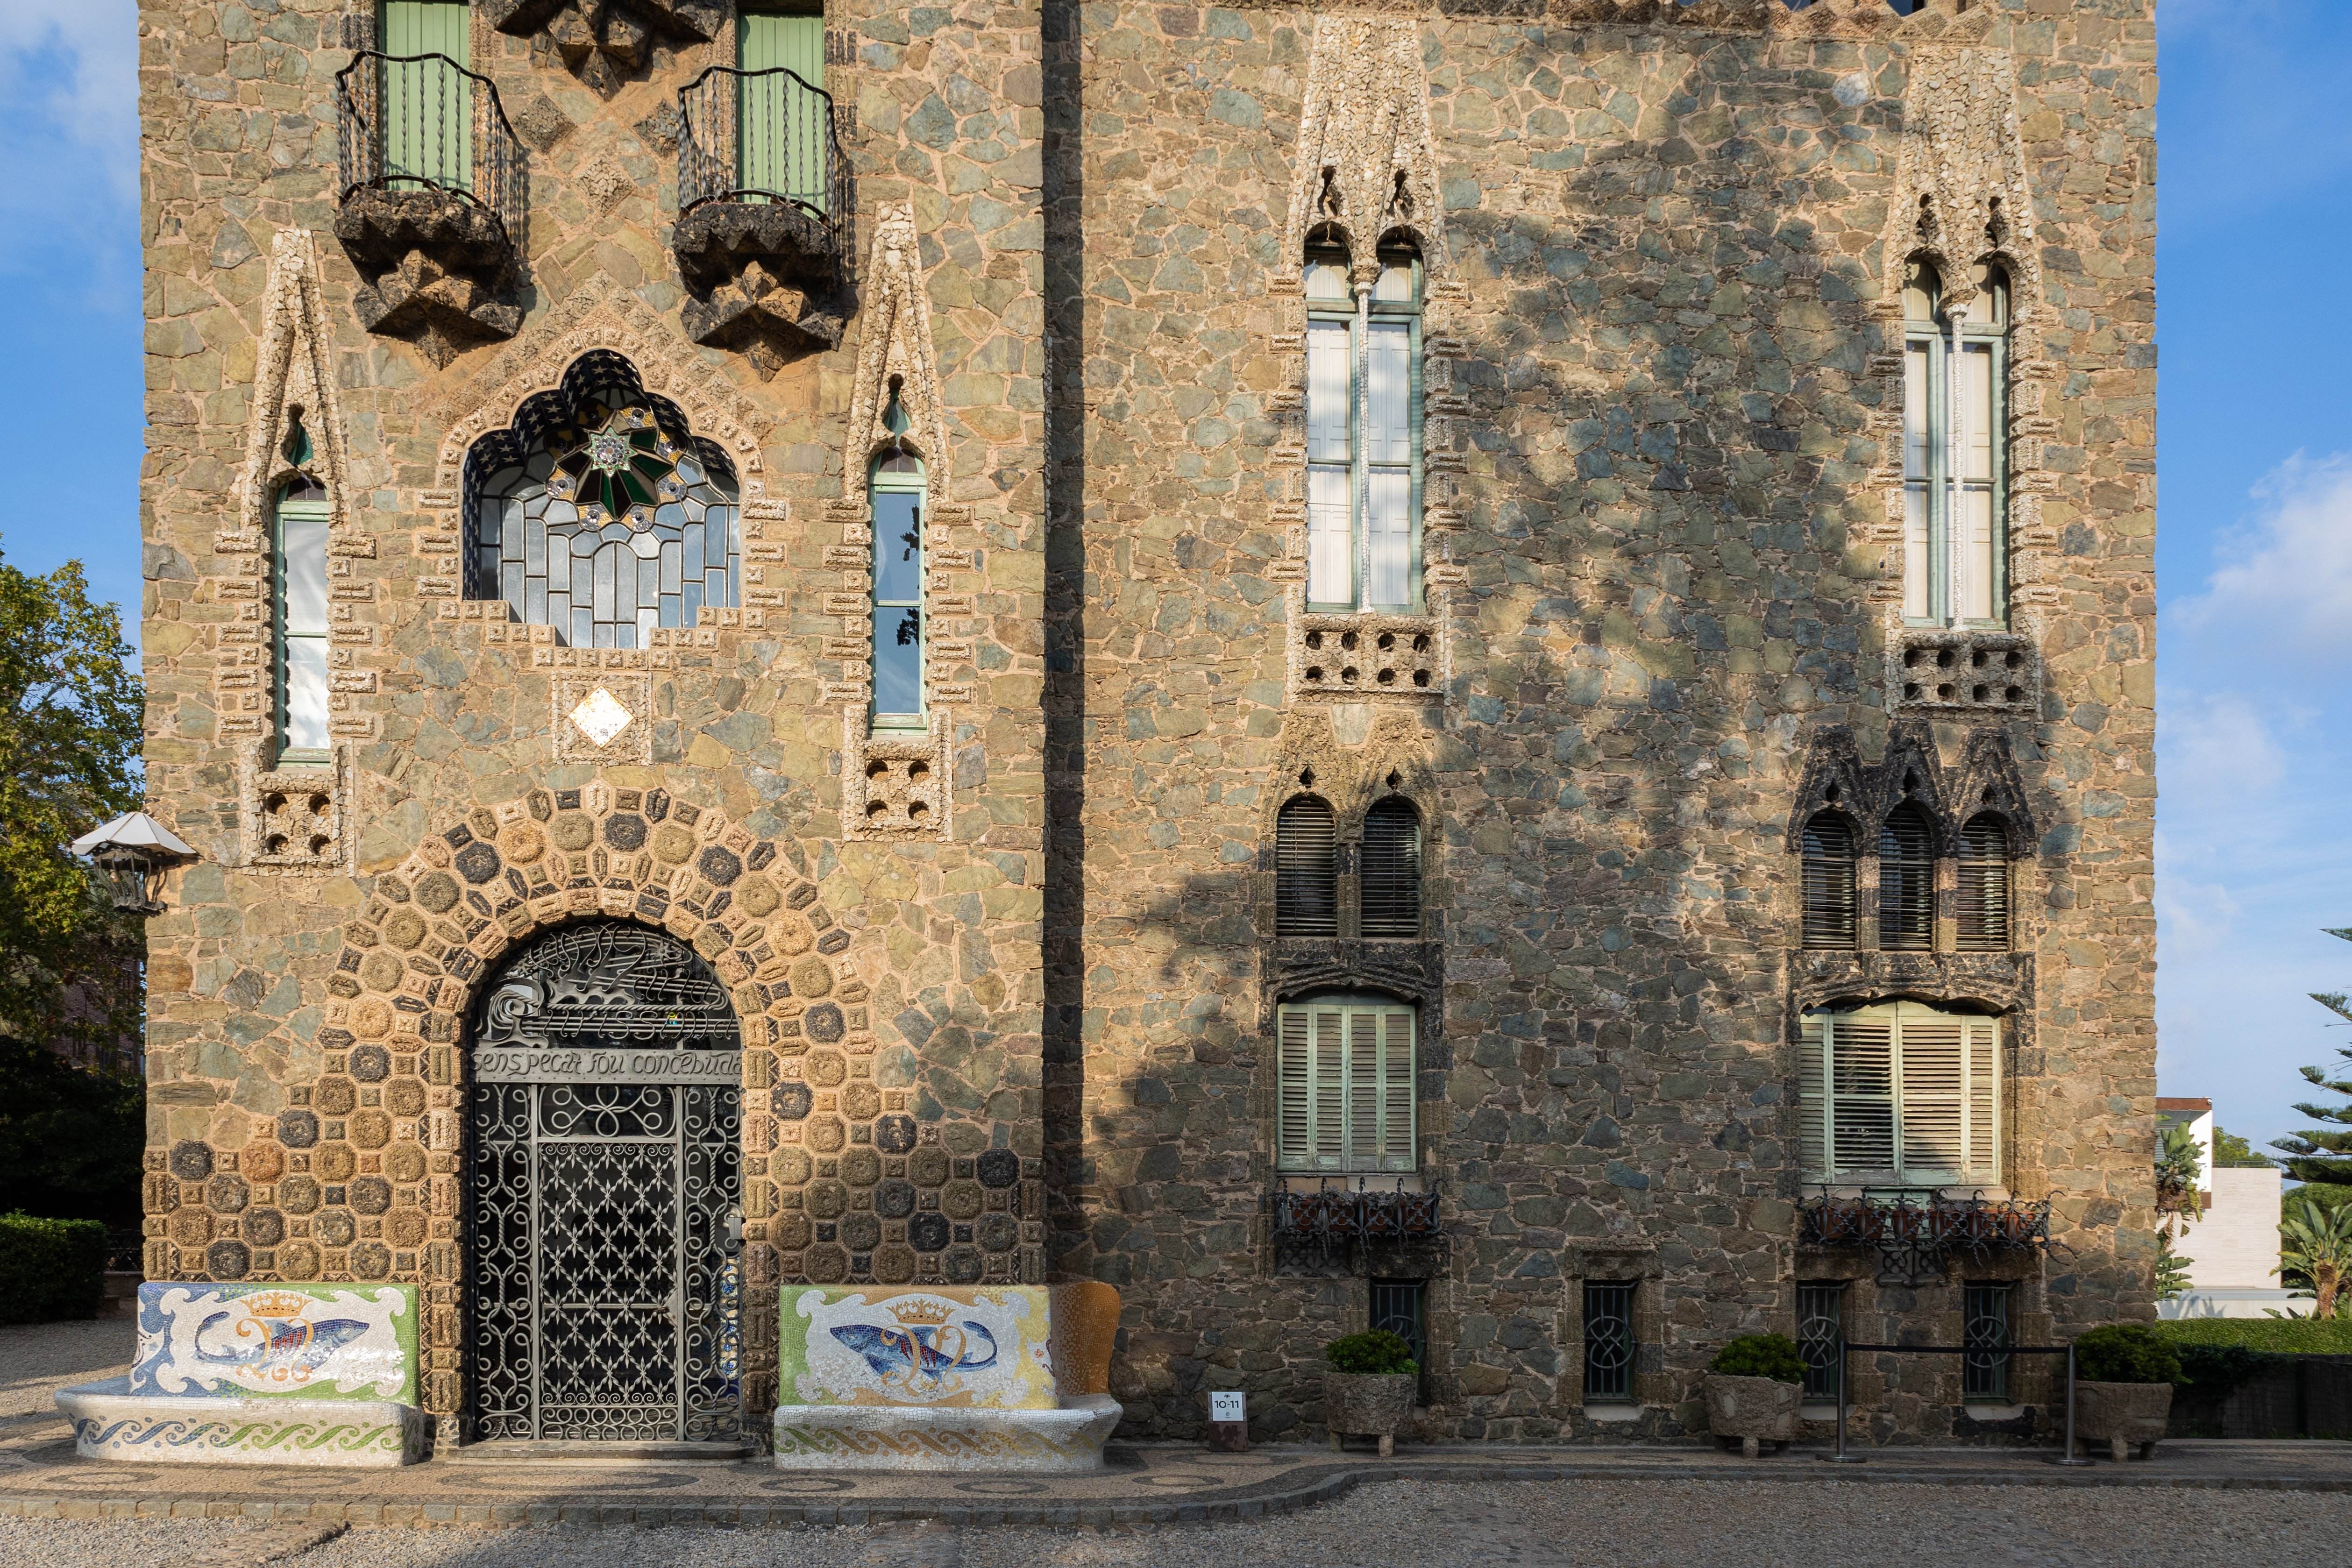 Sis obres d’Antoni Gaudí sumen esforços per esdevenir patrimoni de la humanitat